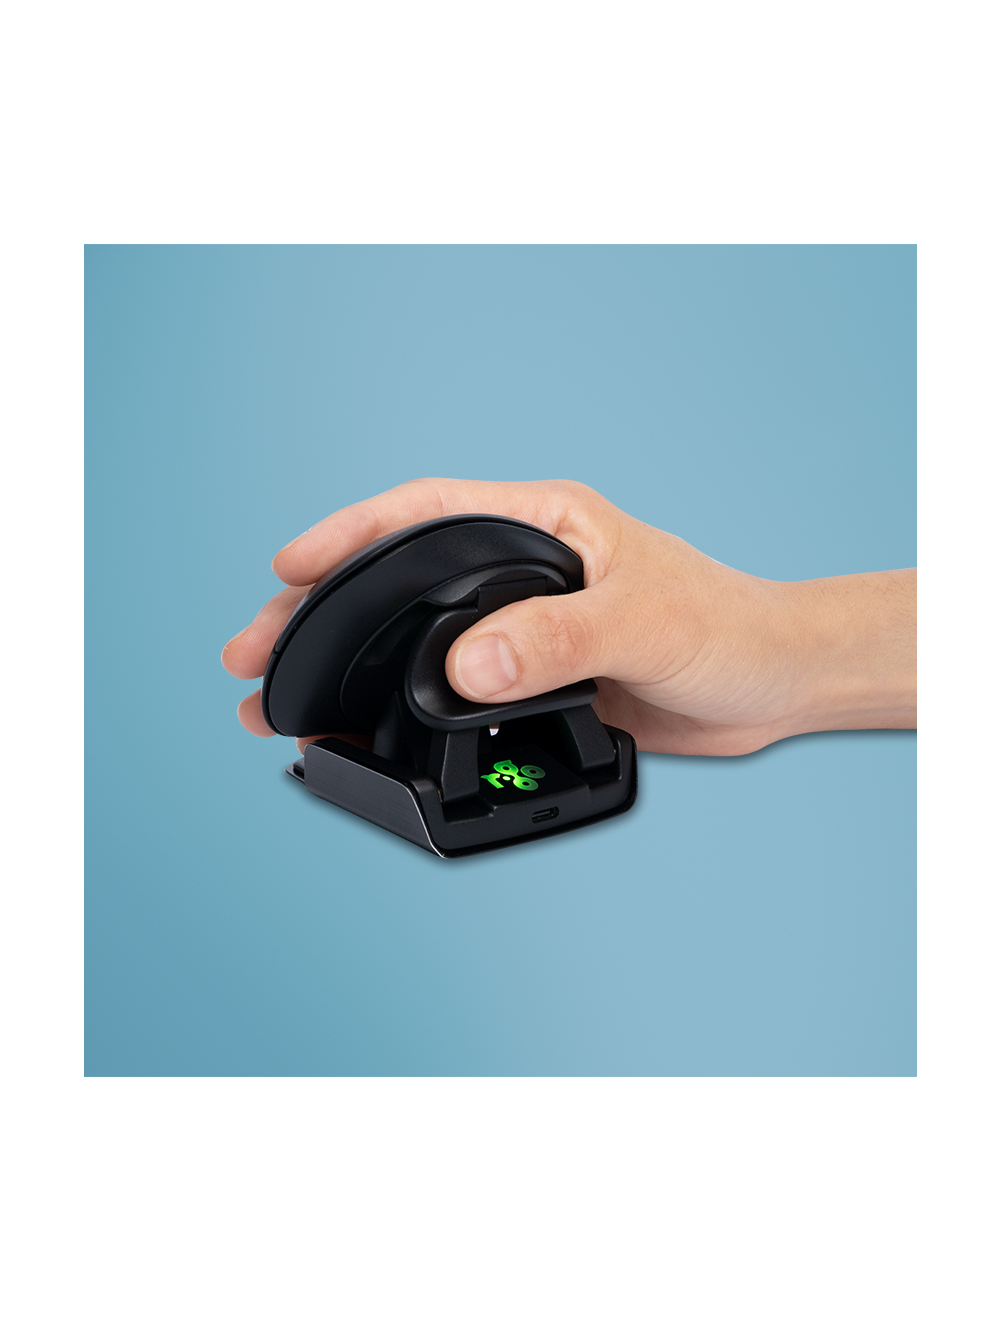 HE Mouse Break Twister Ambidextrous Wired/Wireless Bluetooth